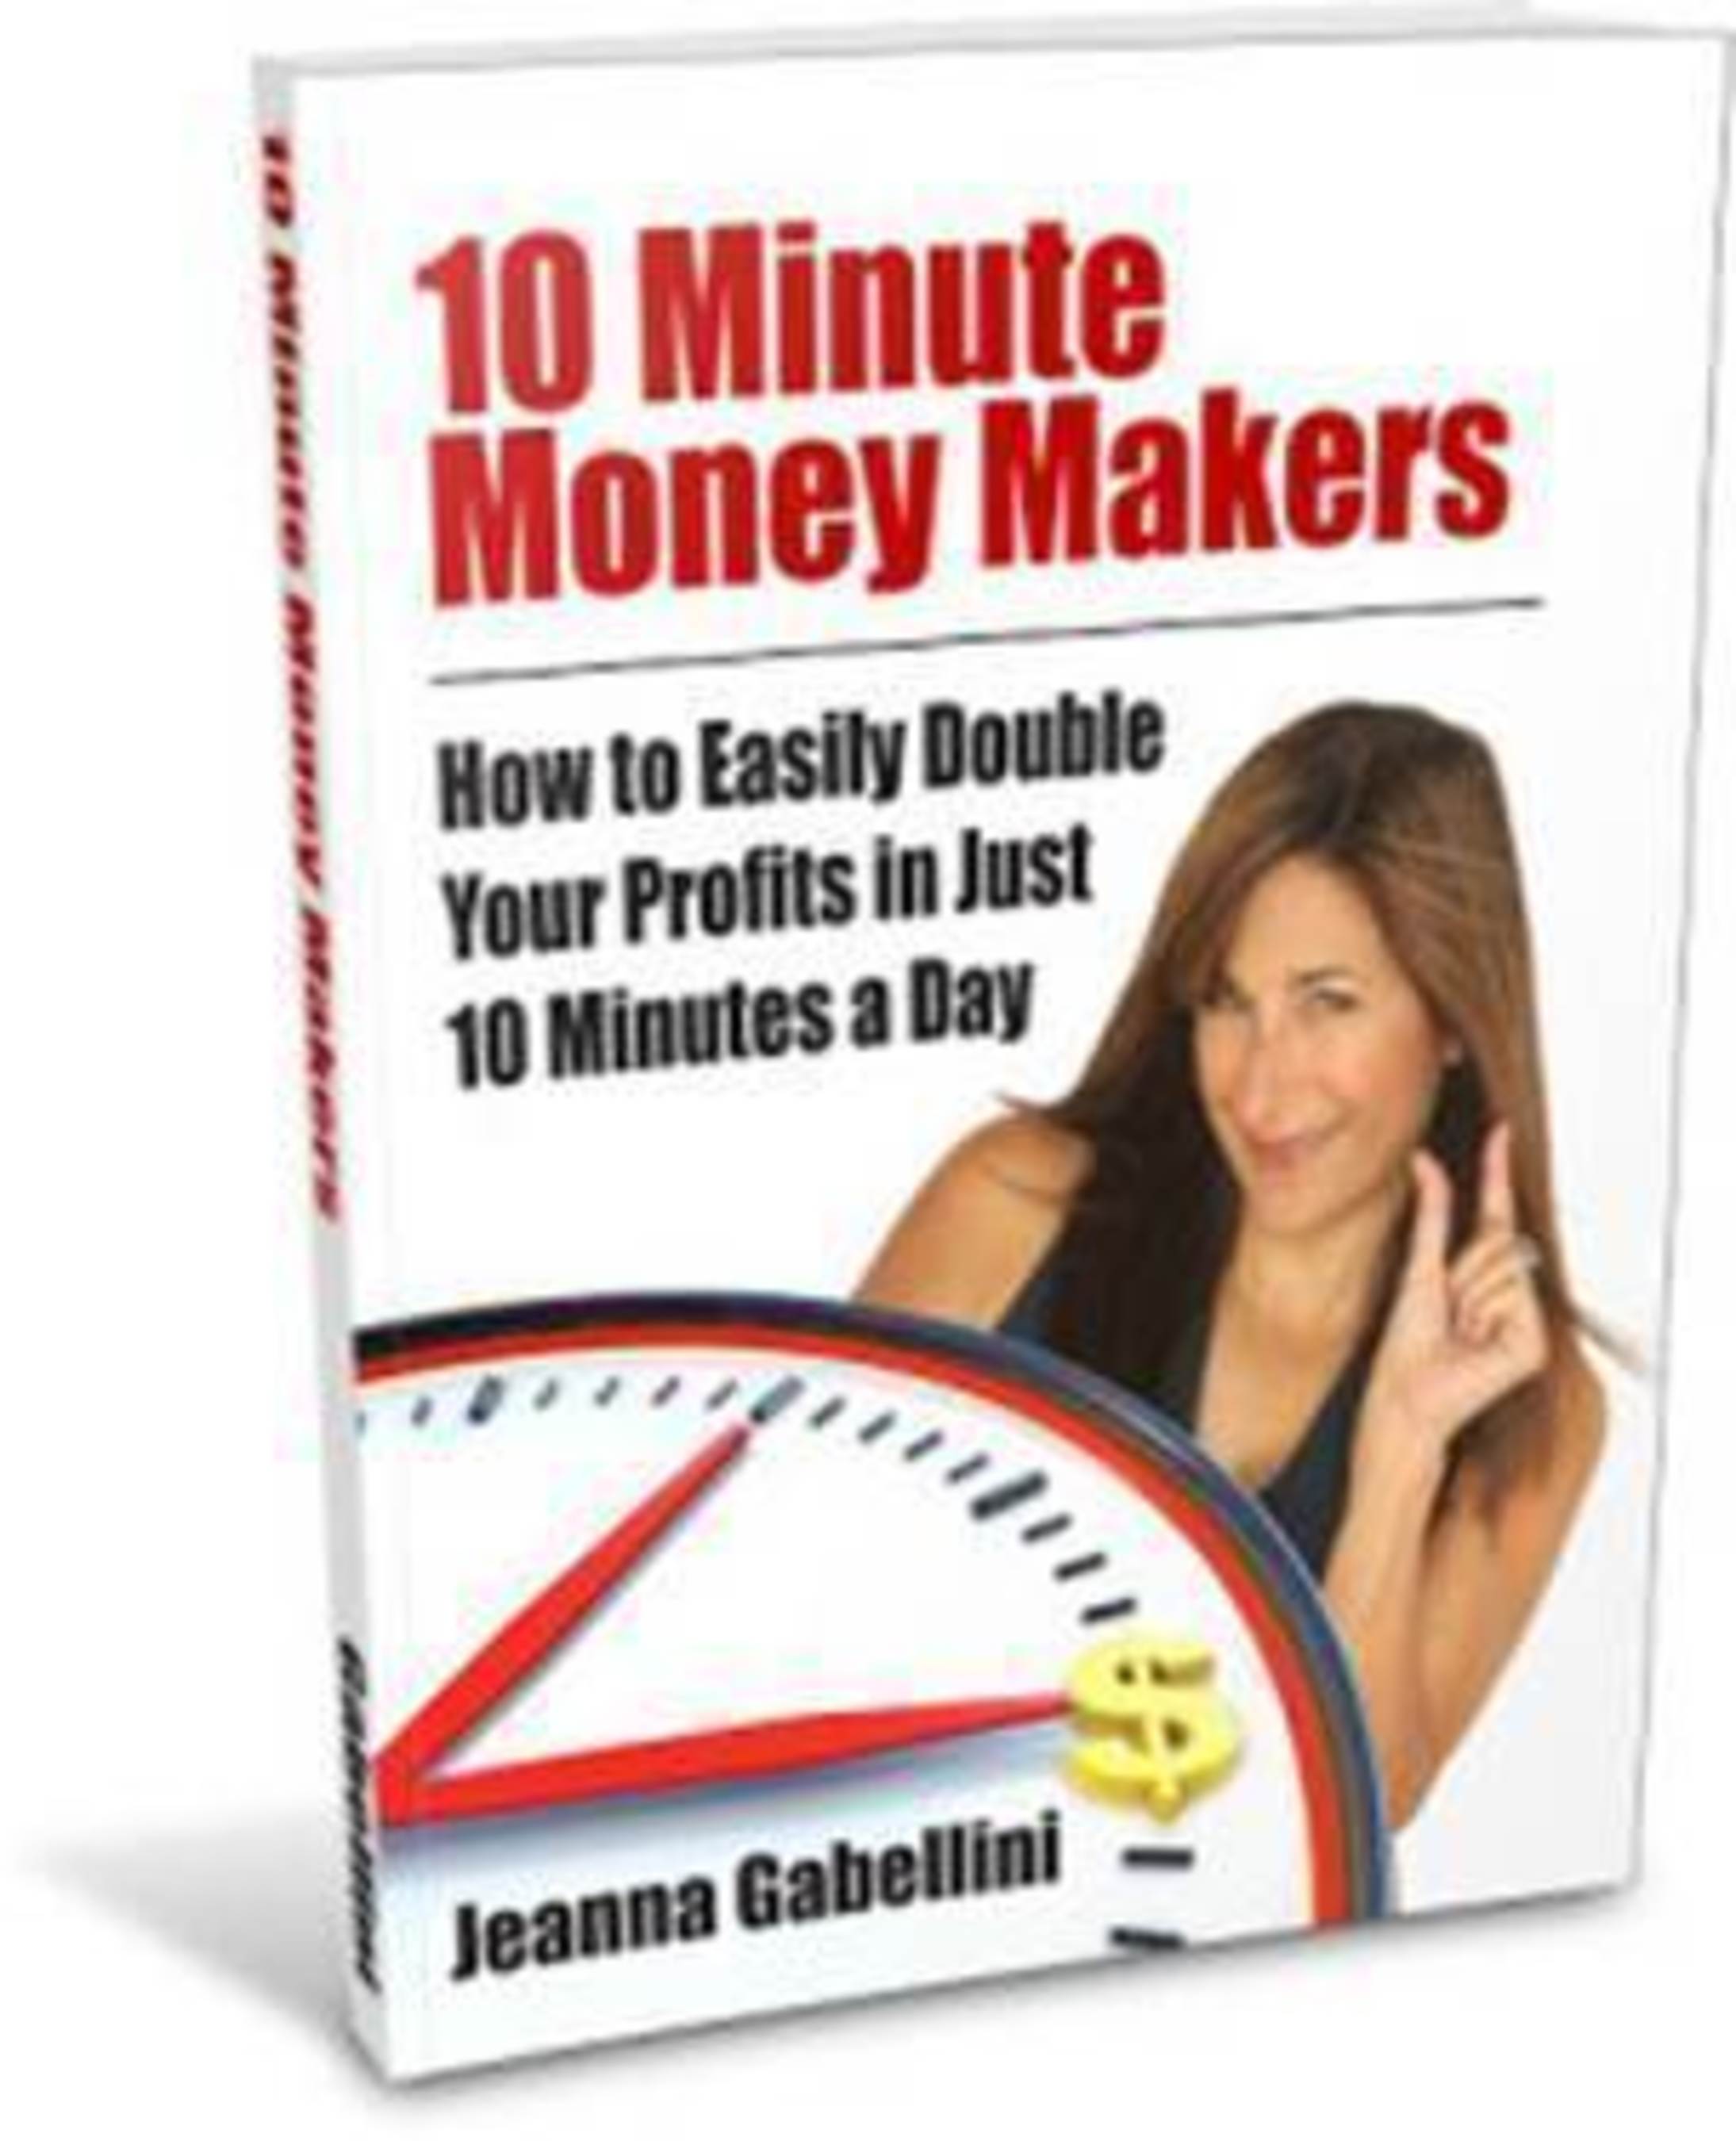 10 Minute Money Makers (PRNewsFoto/Jeanna Gabellini)